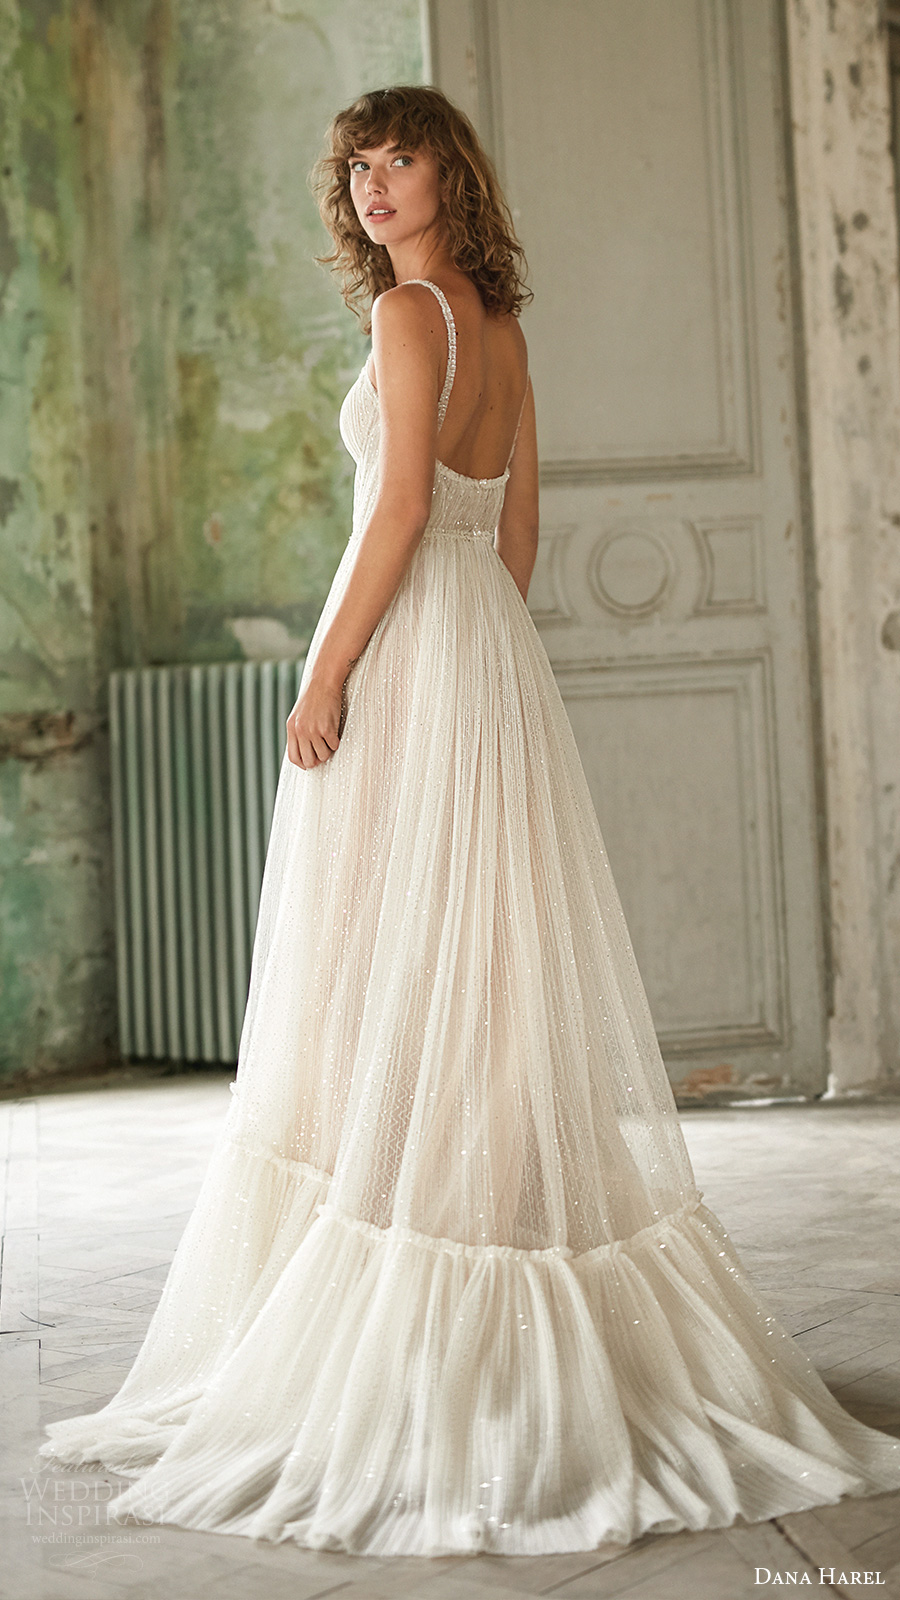 dana harel fall 2020 bridal sleeveless straps sweetheart neckline embellished a line ball gown wedding dress (3) bv